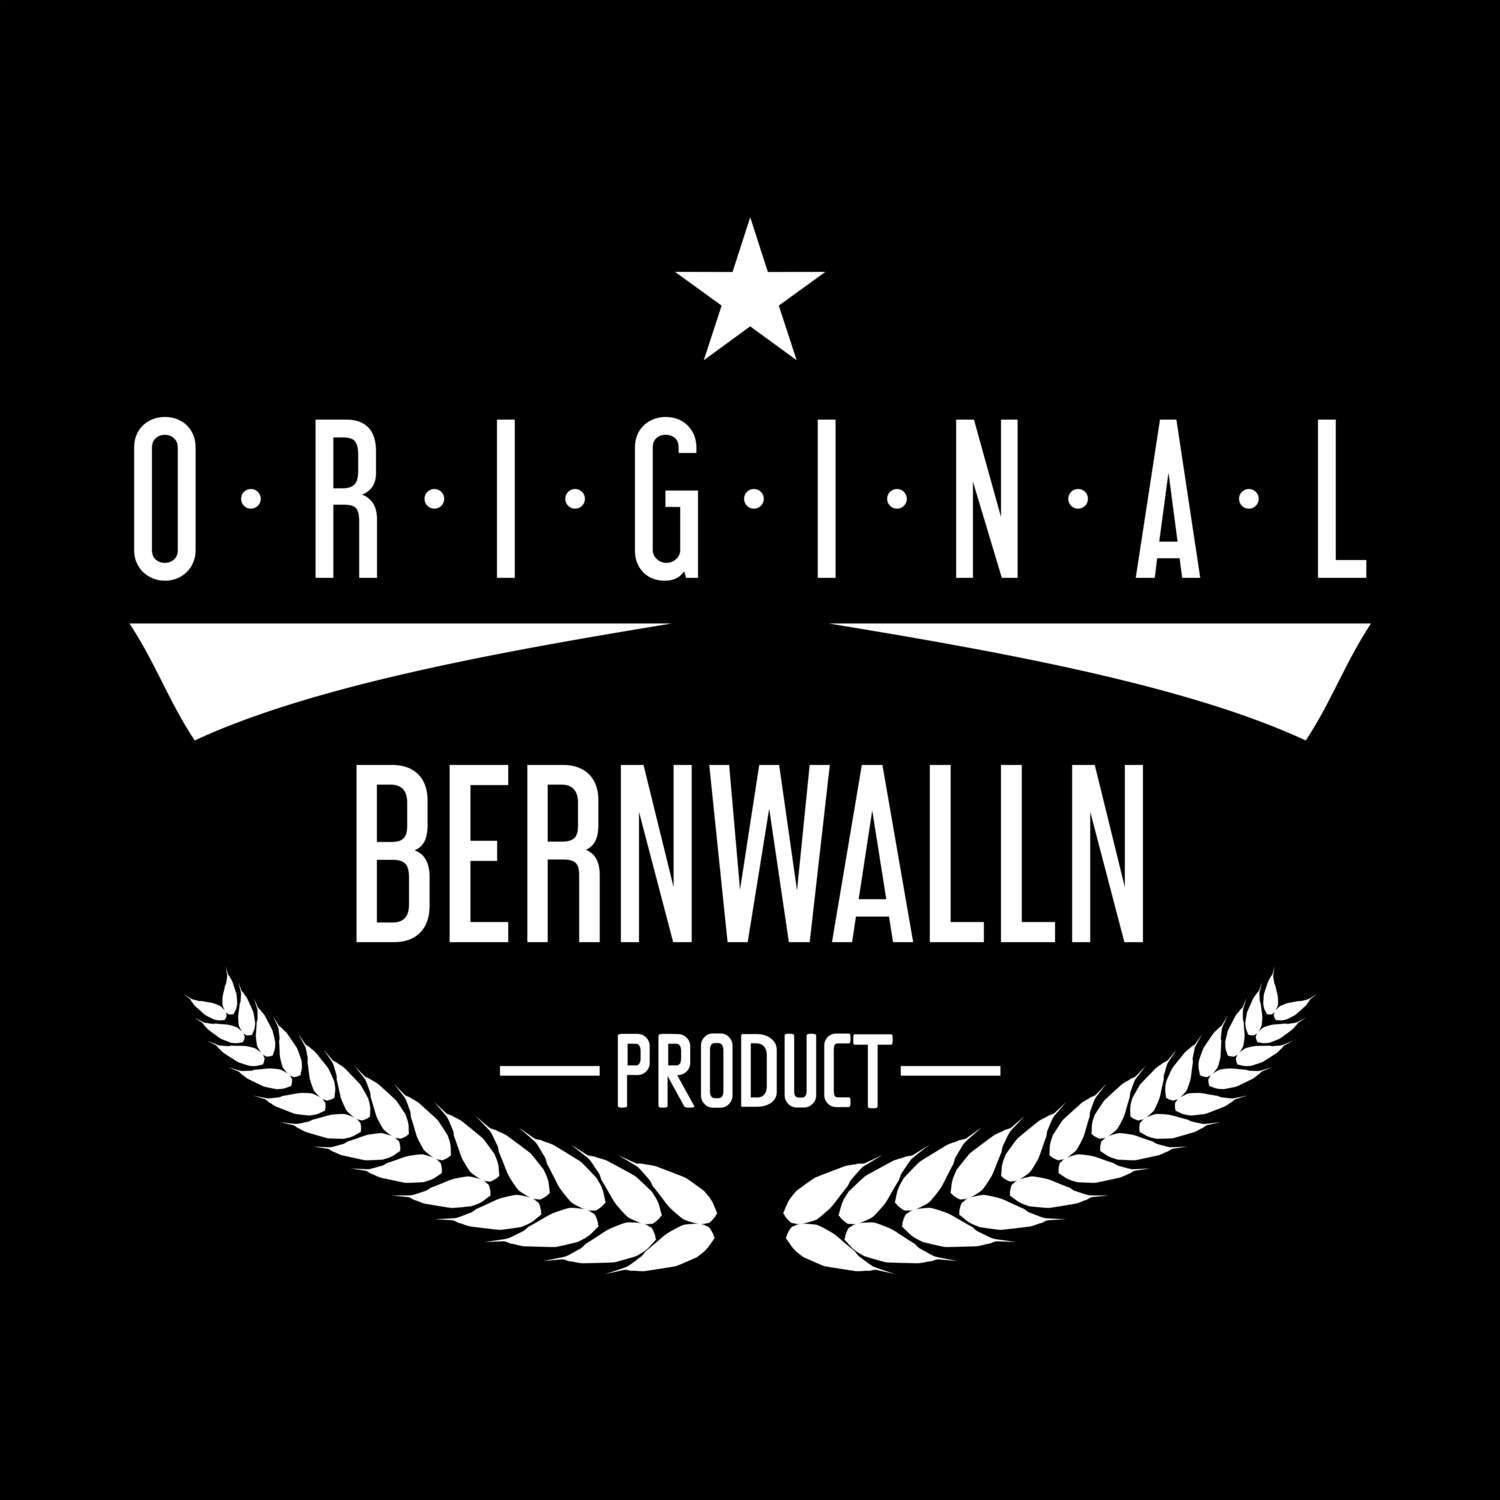 Bernwalln T-Shirt »Original Product«